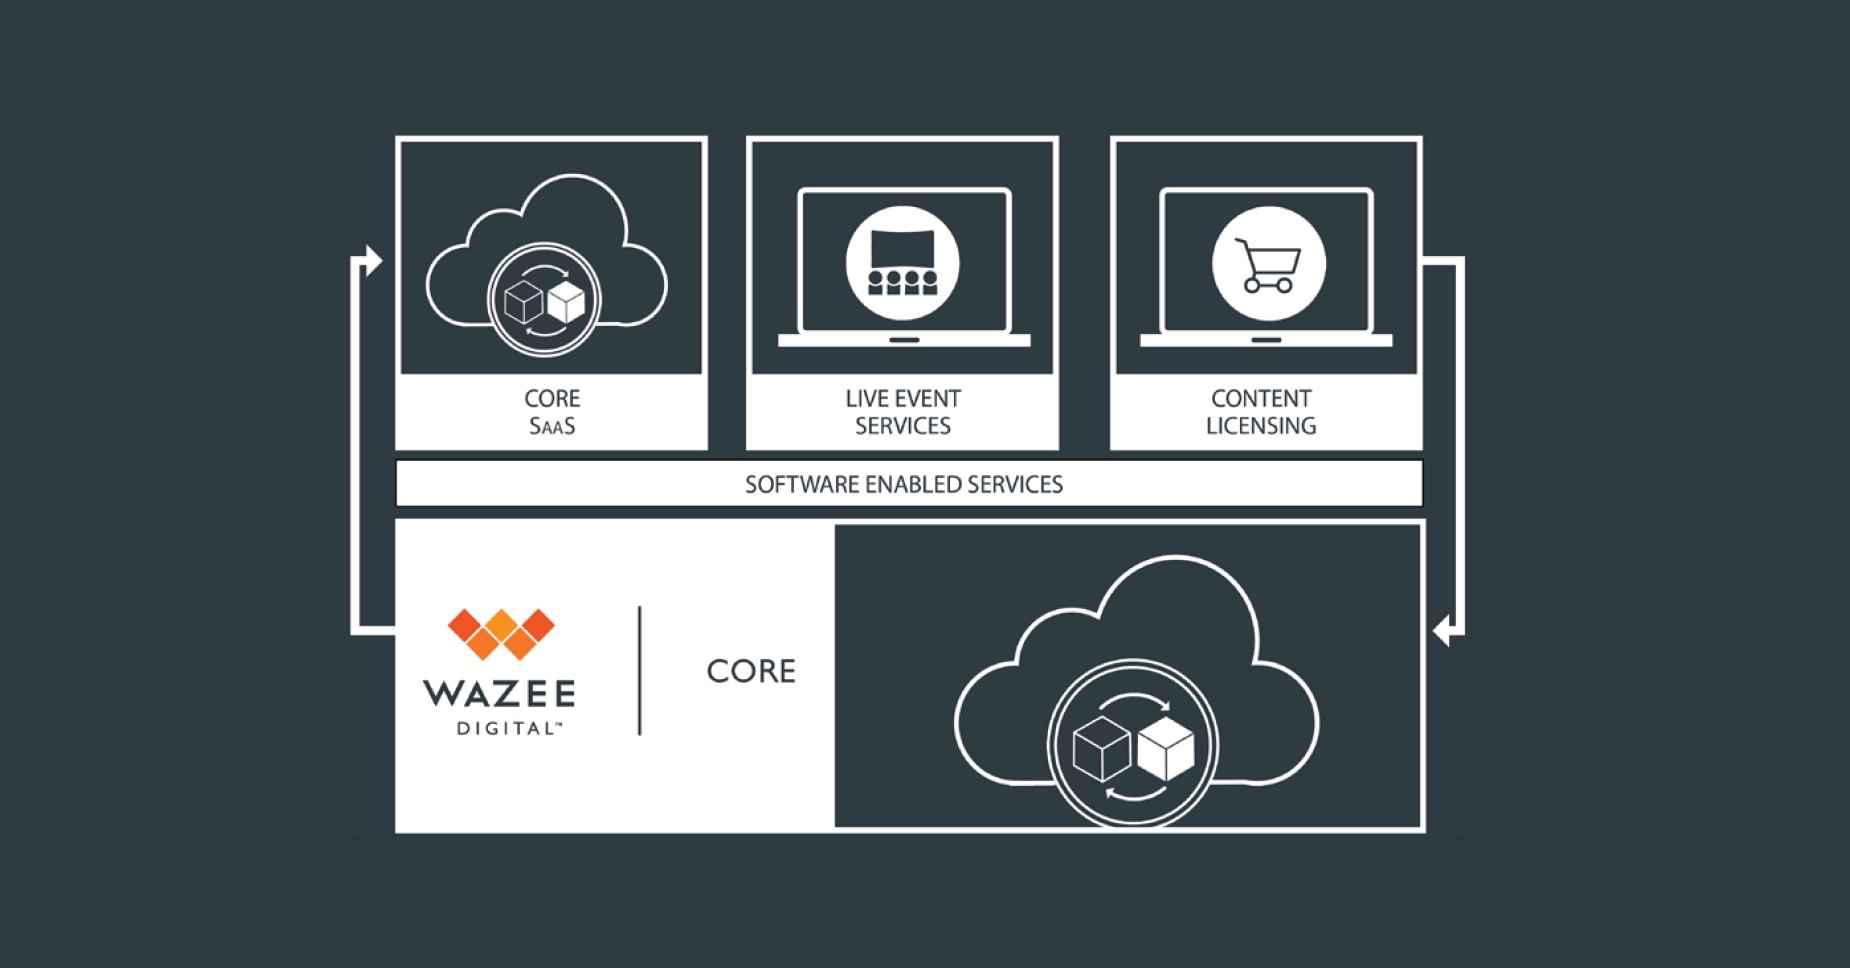 Telestream engineers solved a key concern for Wazee Digital